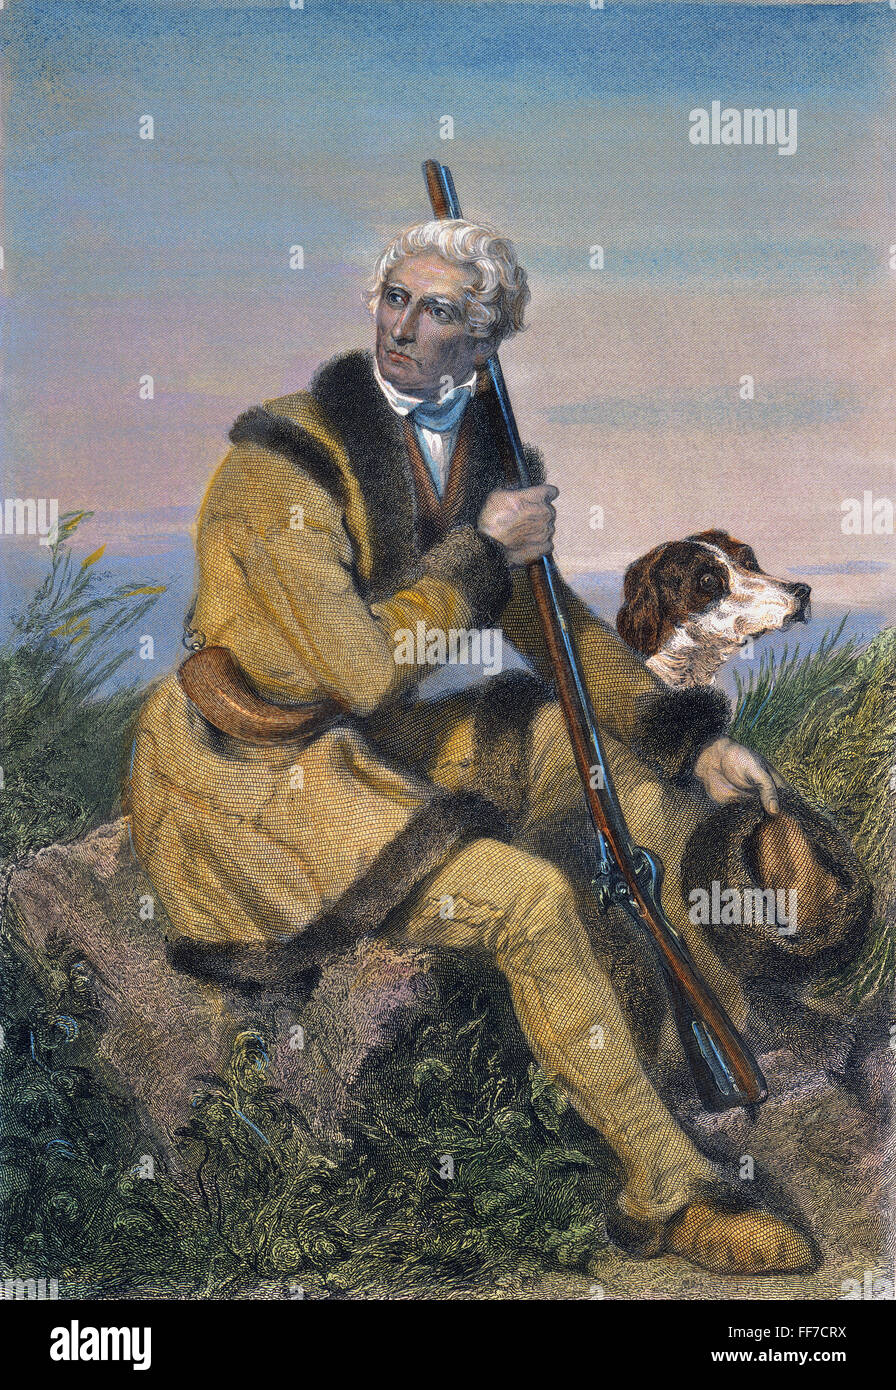 DANIEL BOONE (1734-1820). /nAmerican frontiersman. Steel engraving, American, 1861. Stock Photo